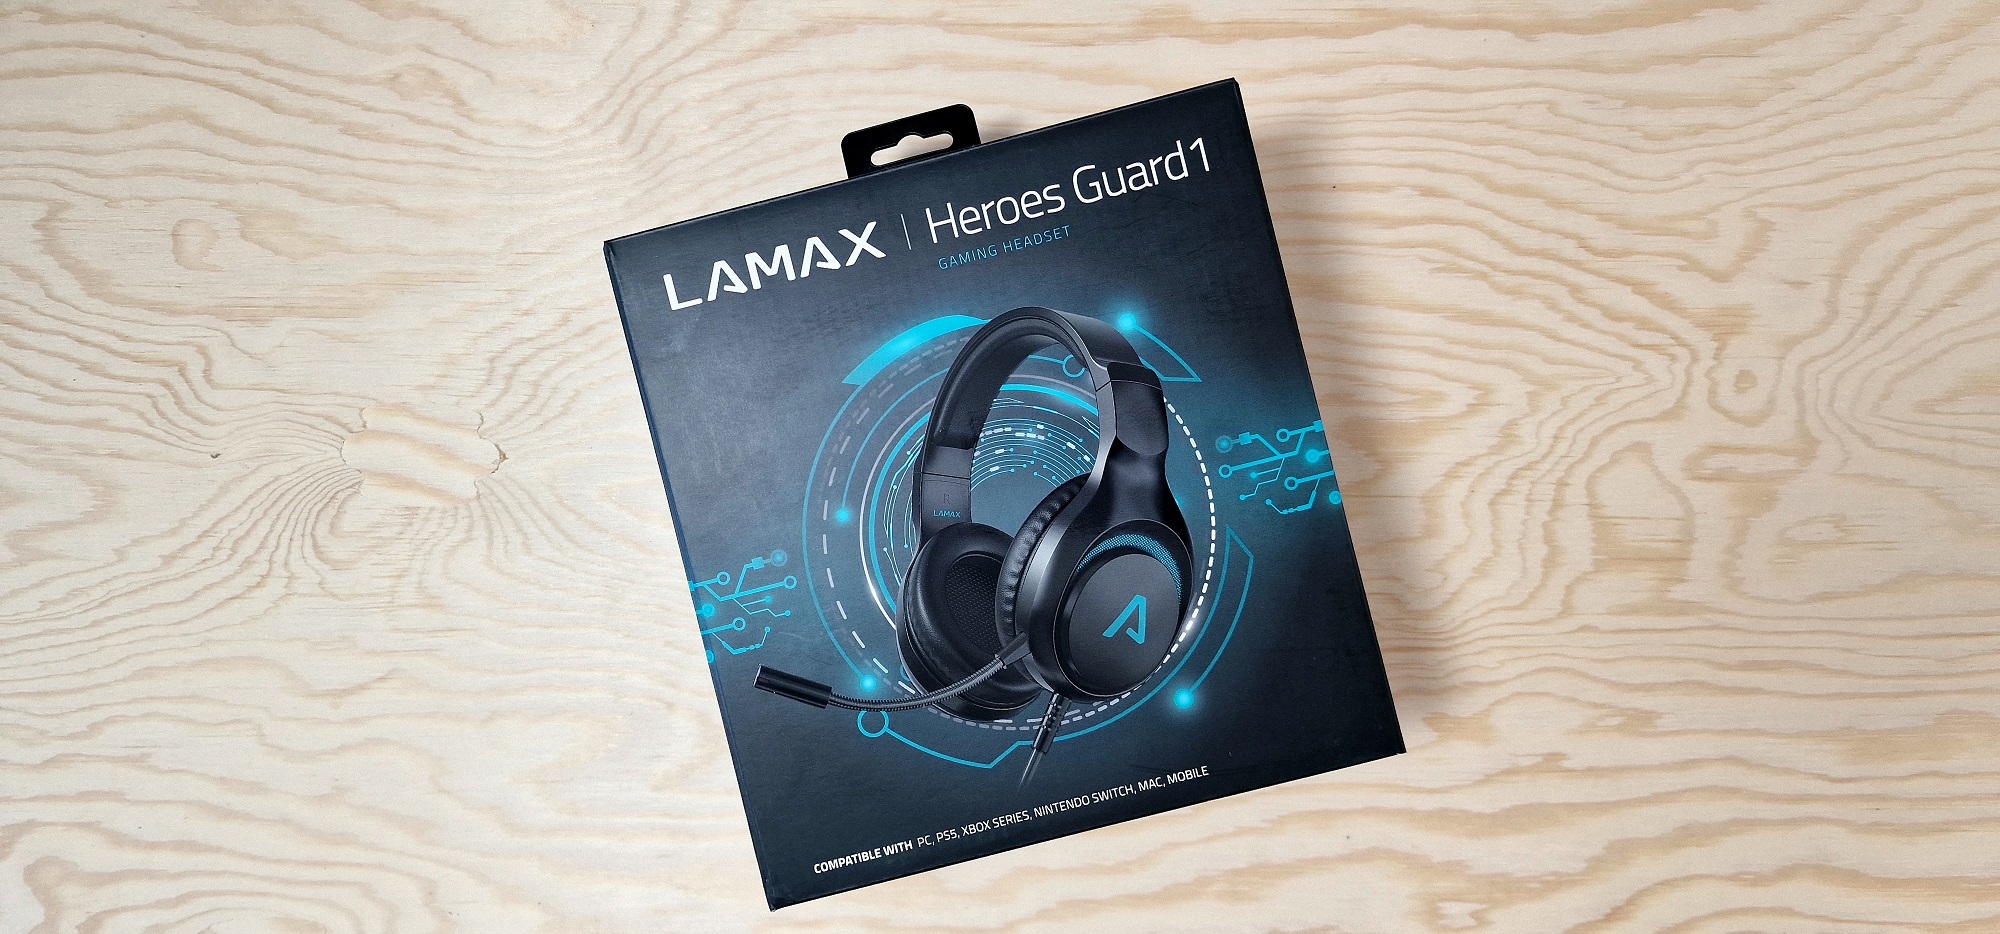 LAMAX Heroes Guard1 - recenze